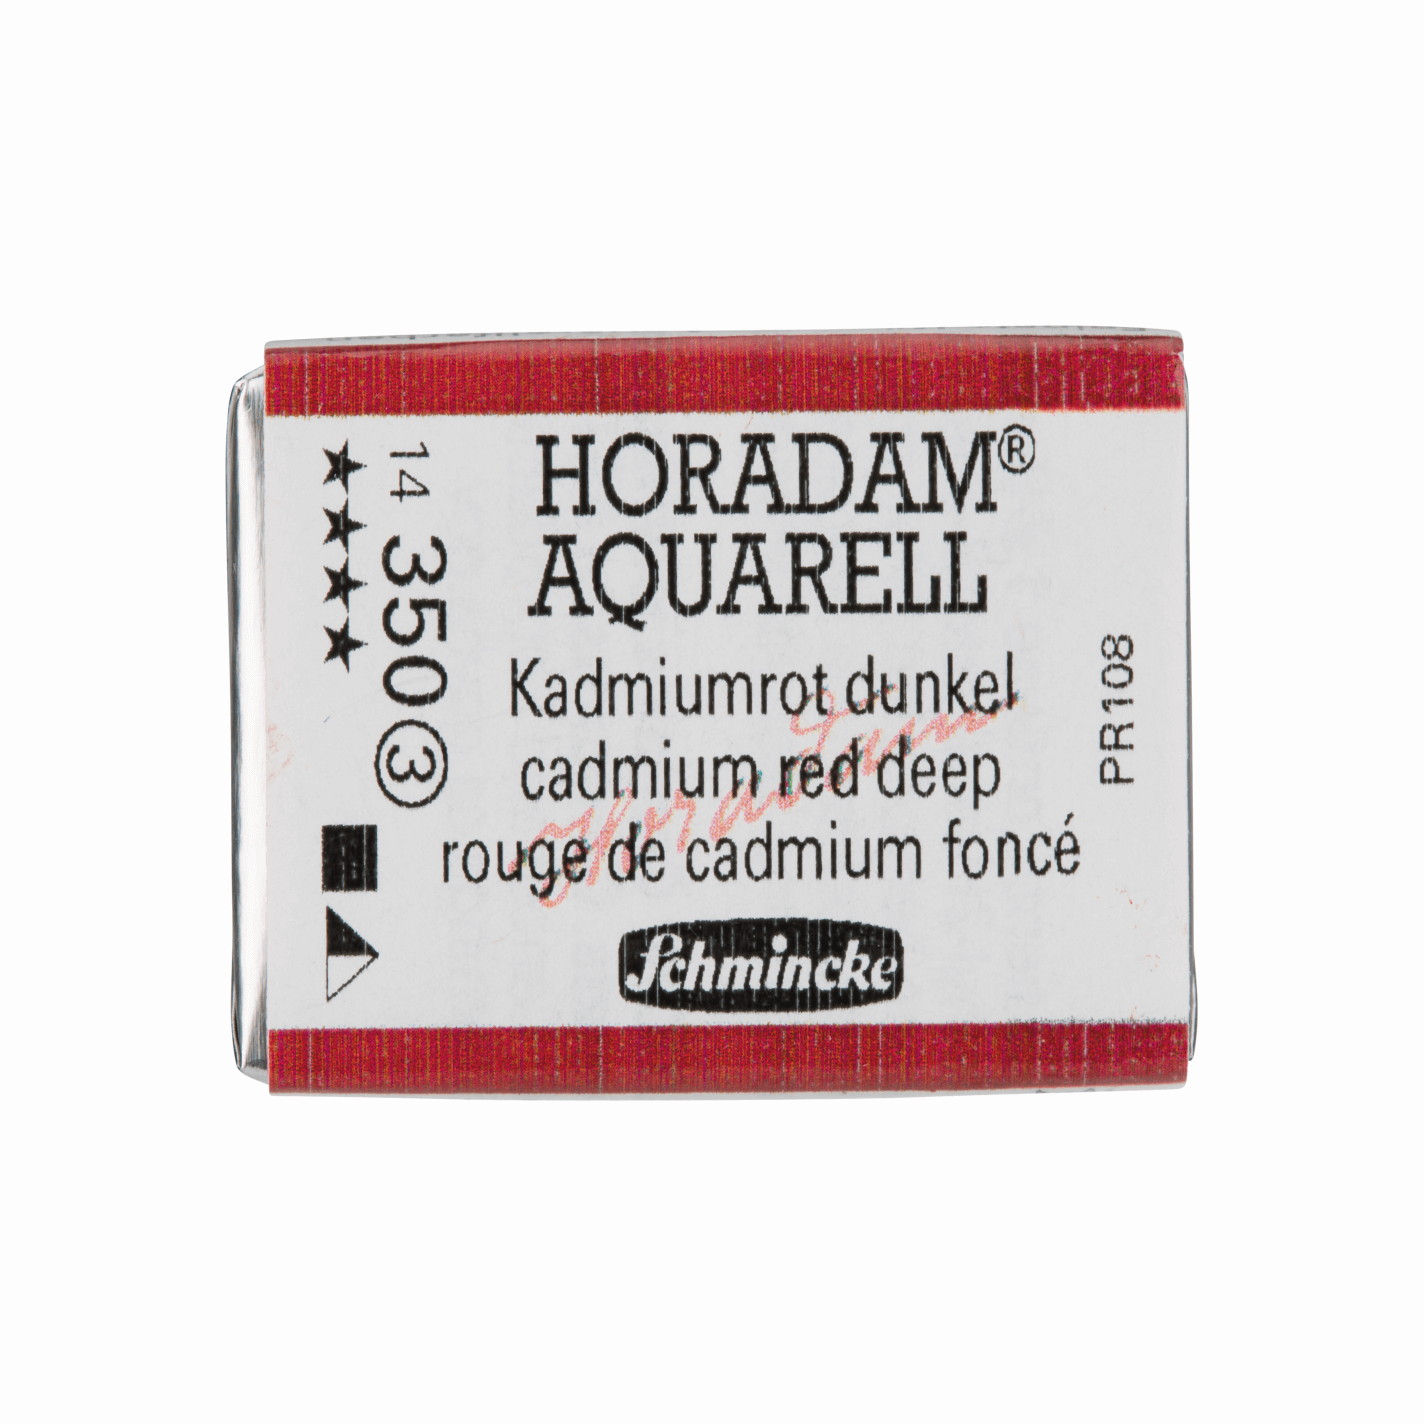 Schmincke Horadam Aquarell pans 1/1 pan Cadmium Red Deep